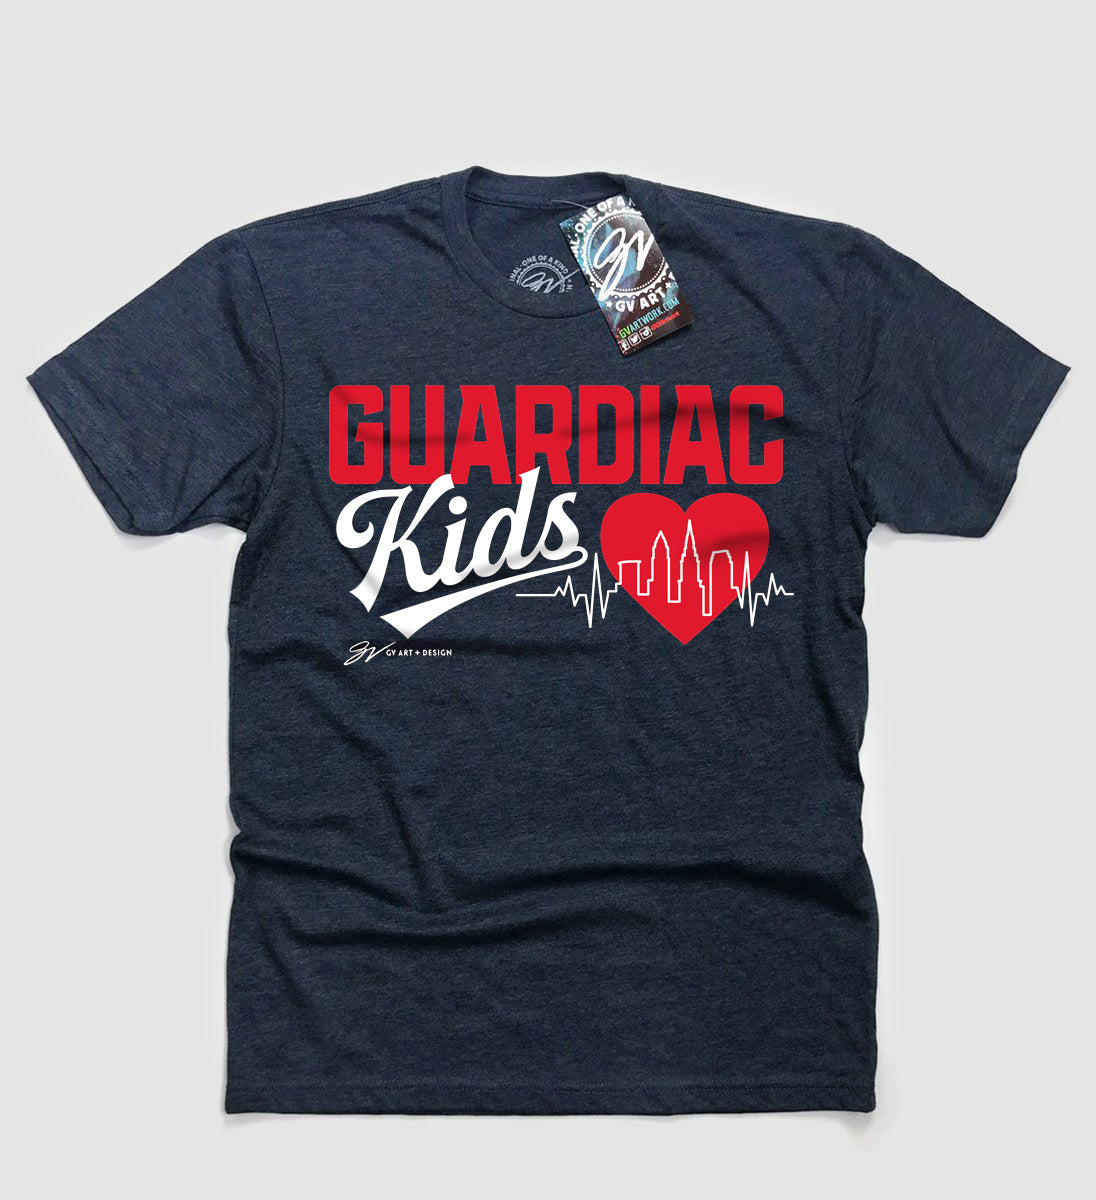 GV Art and Design Cleveland Baseball for Life Tour T Shirt 4XLarge